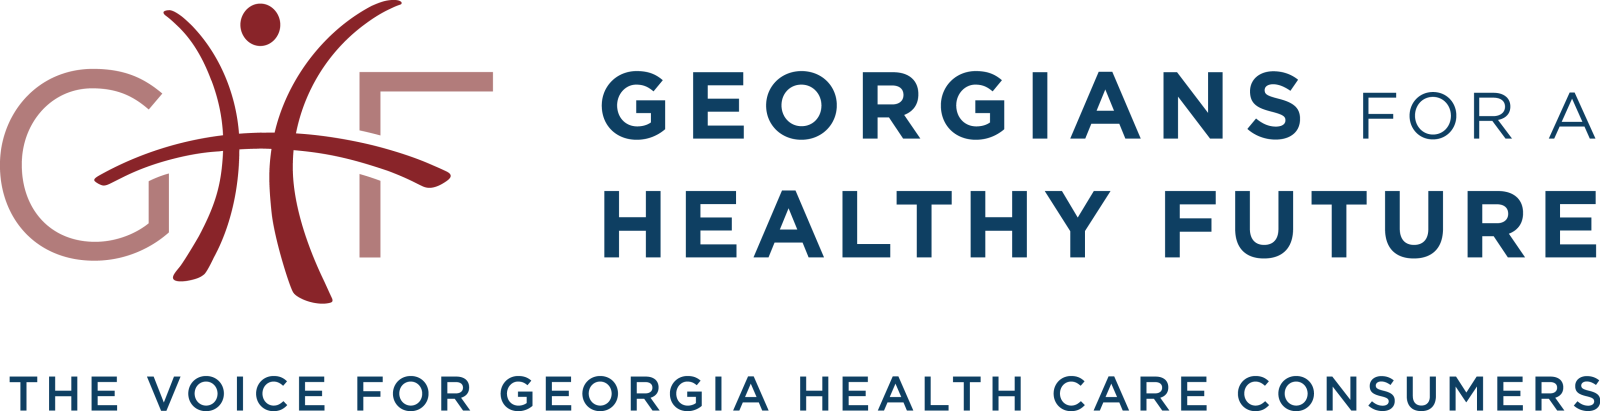 Georgians for a Healthy Future Logo